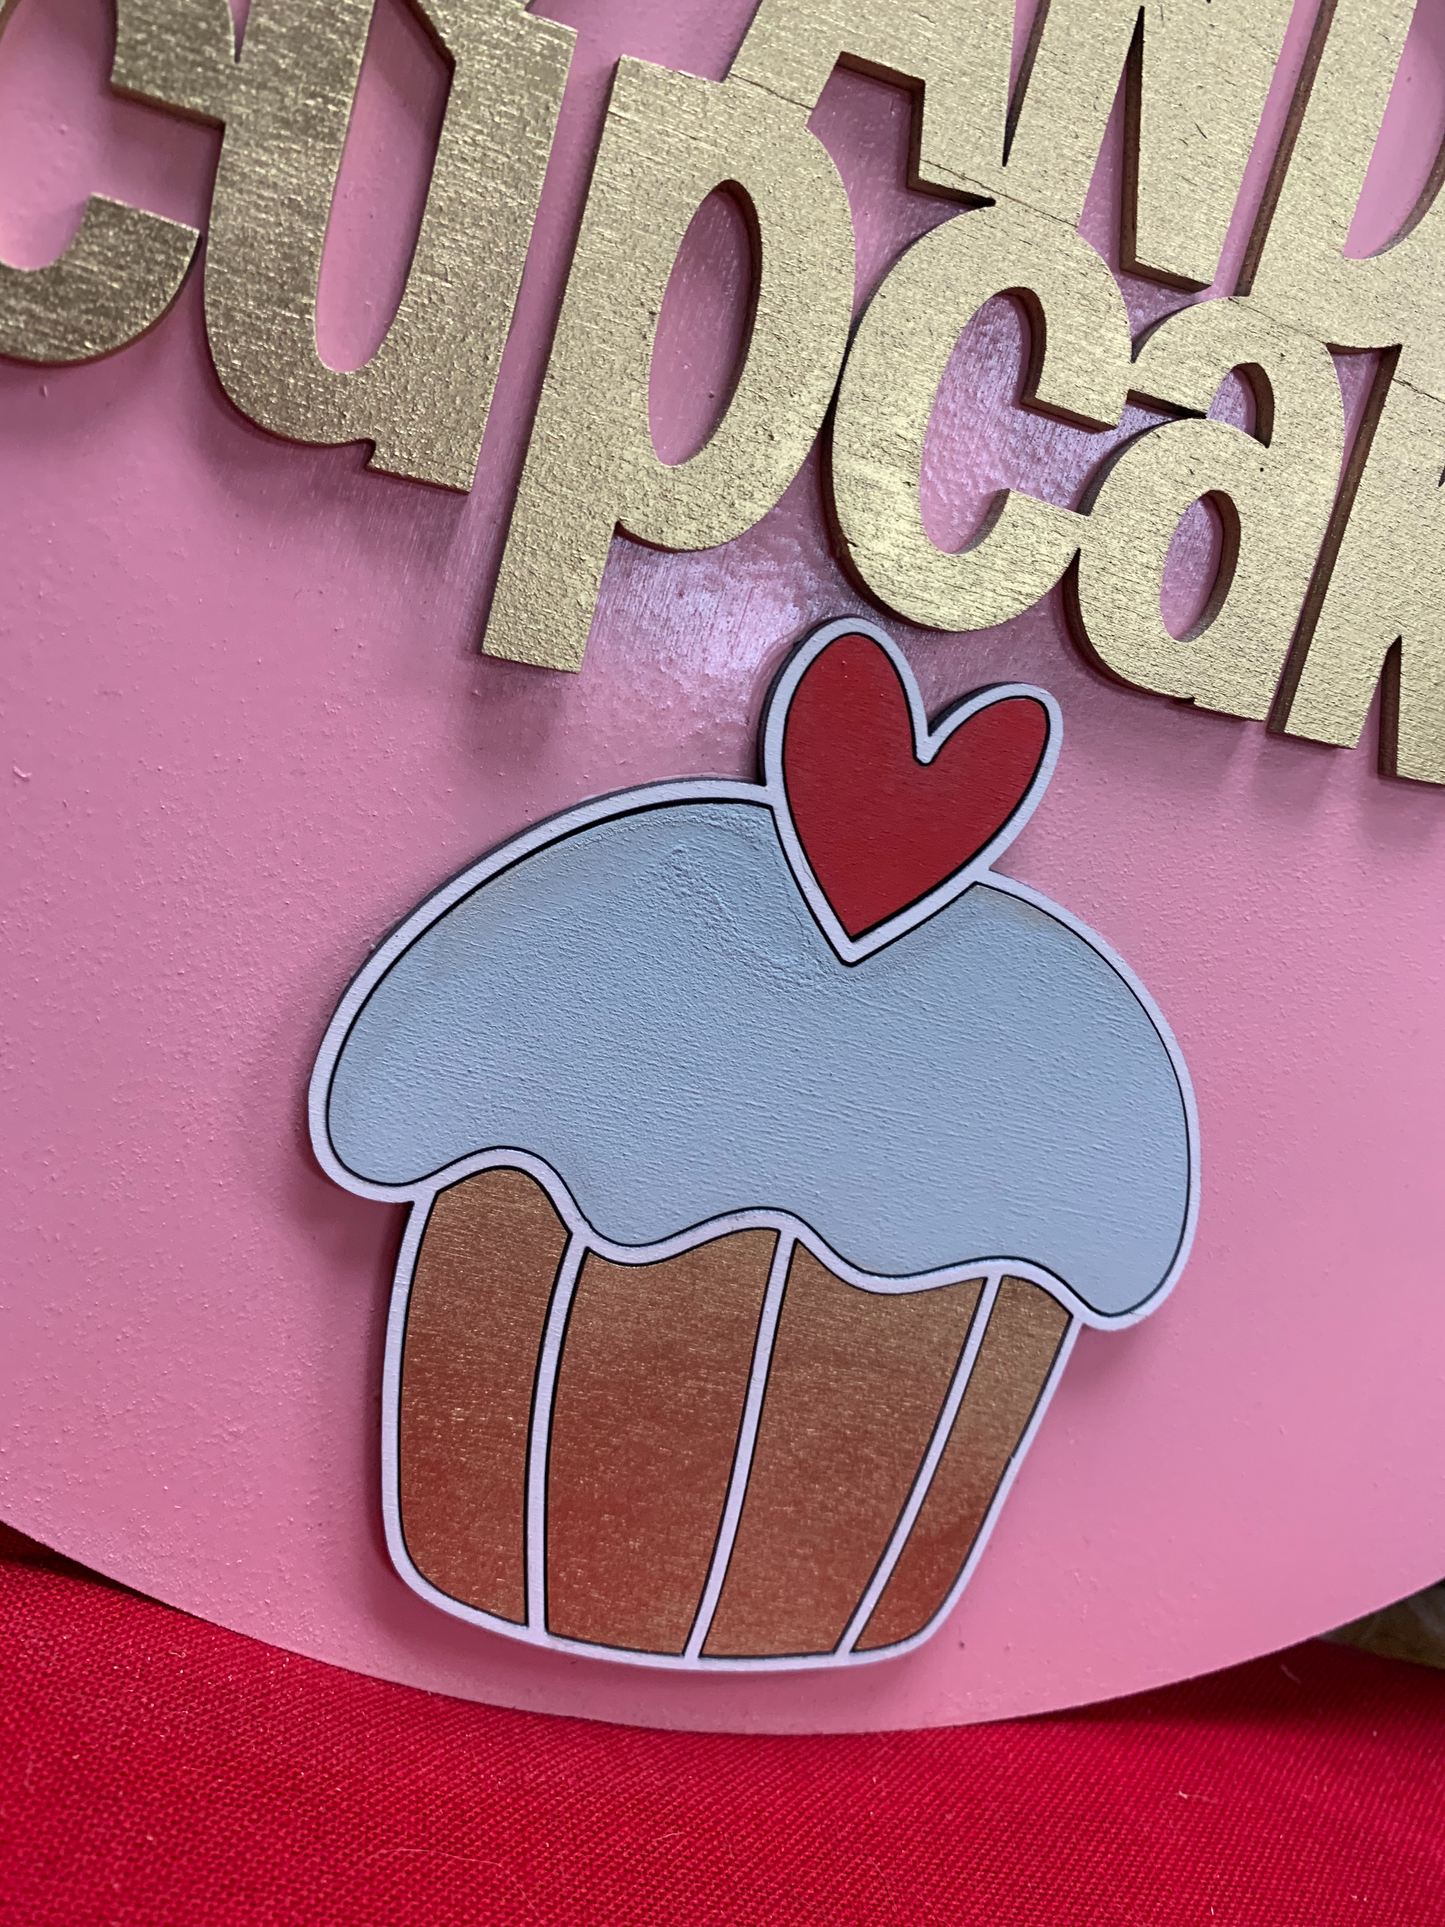 Love & Cupcakes 15" Round Valentine Sign